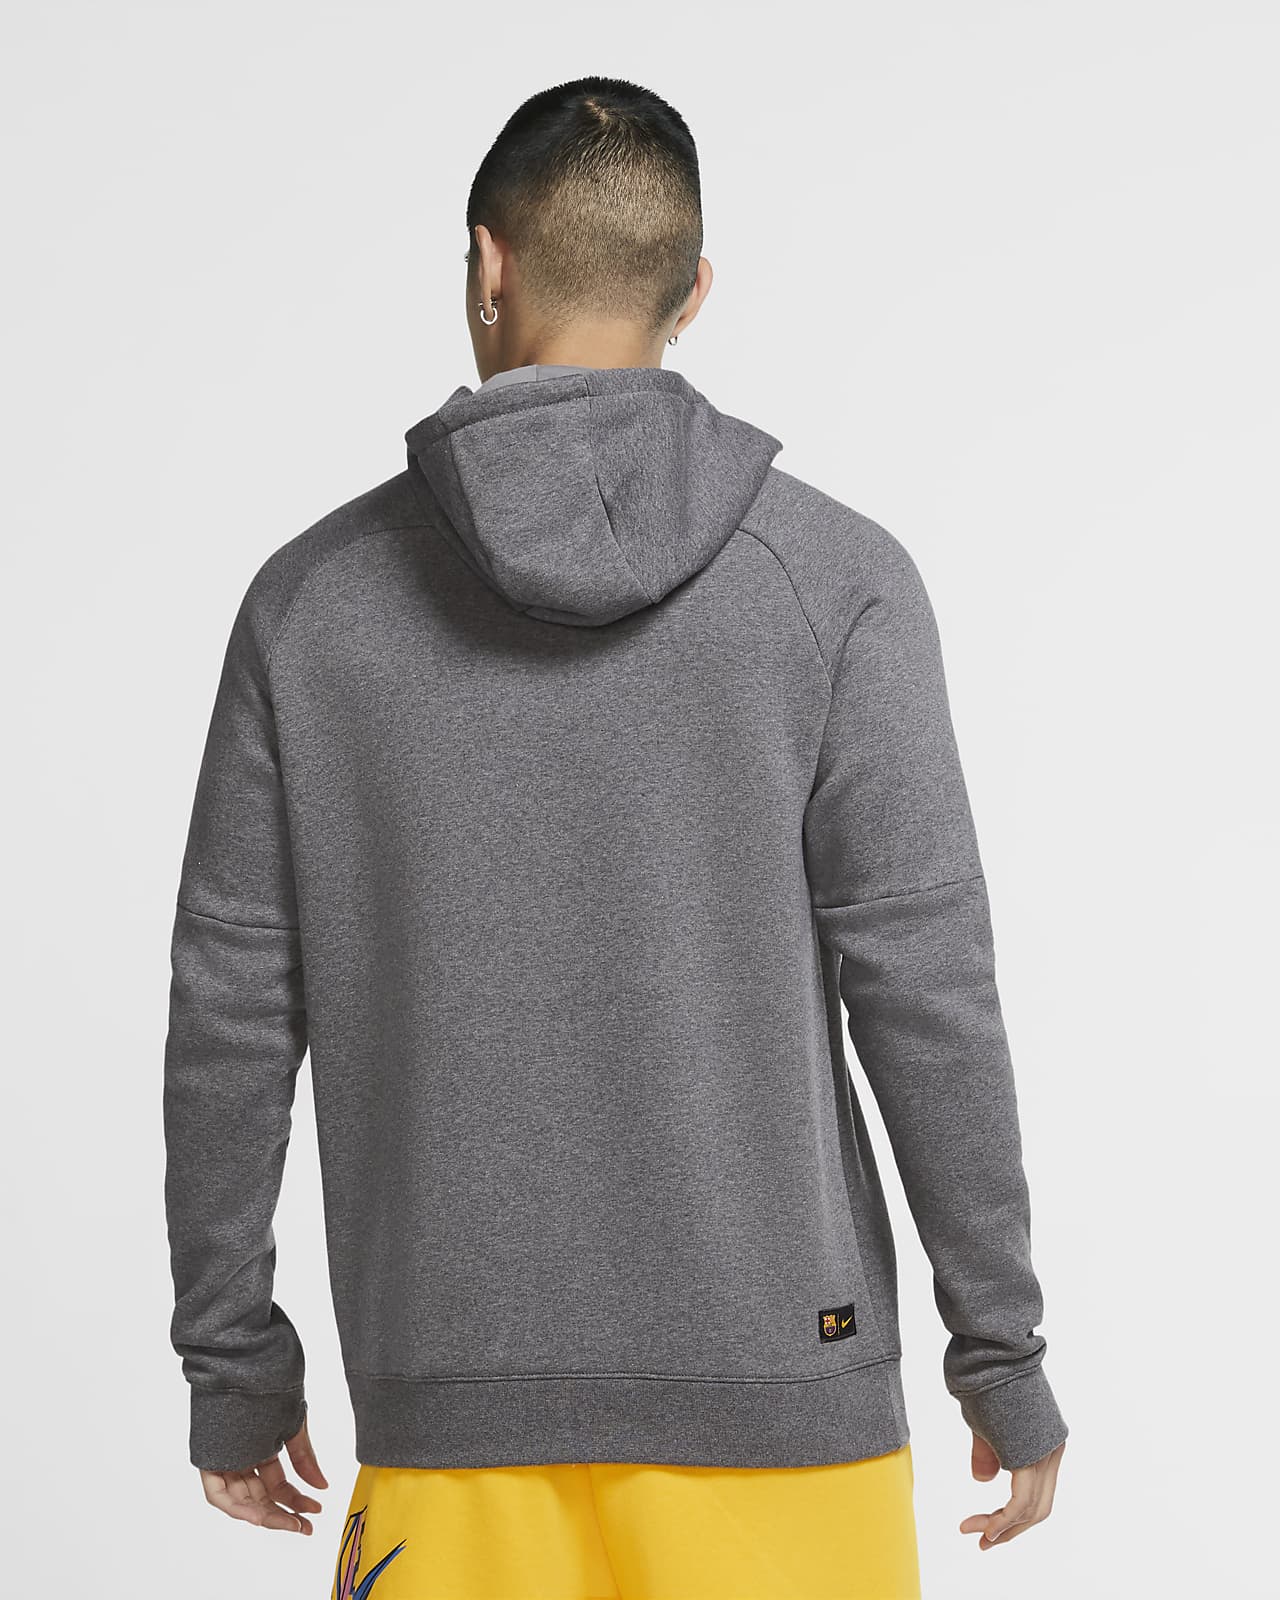 fc barcelona fleece hoodie